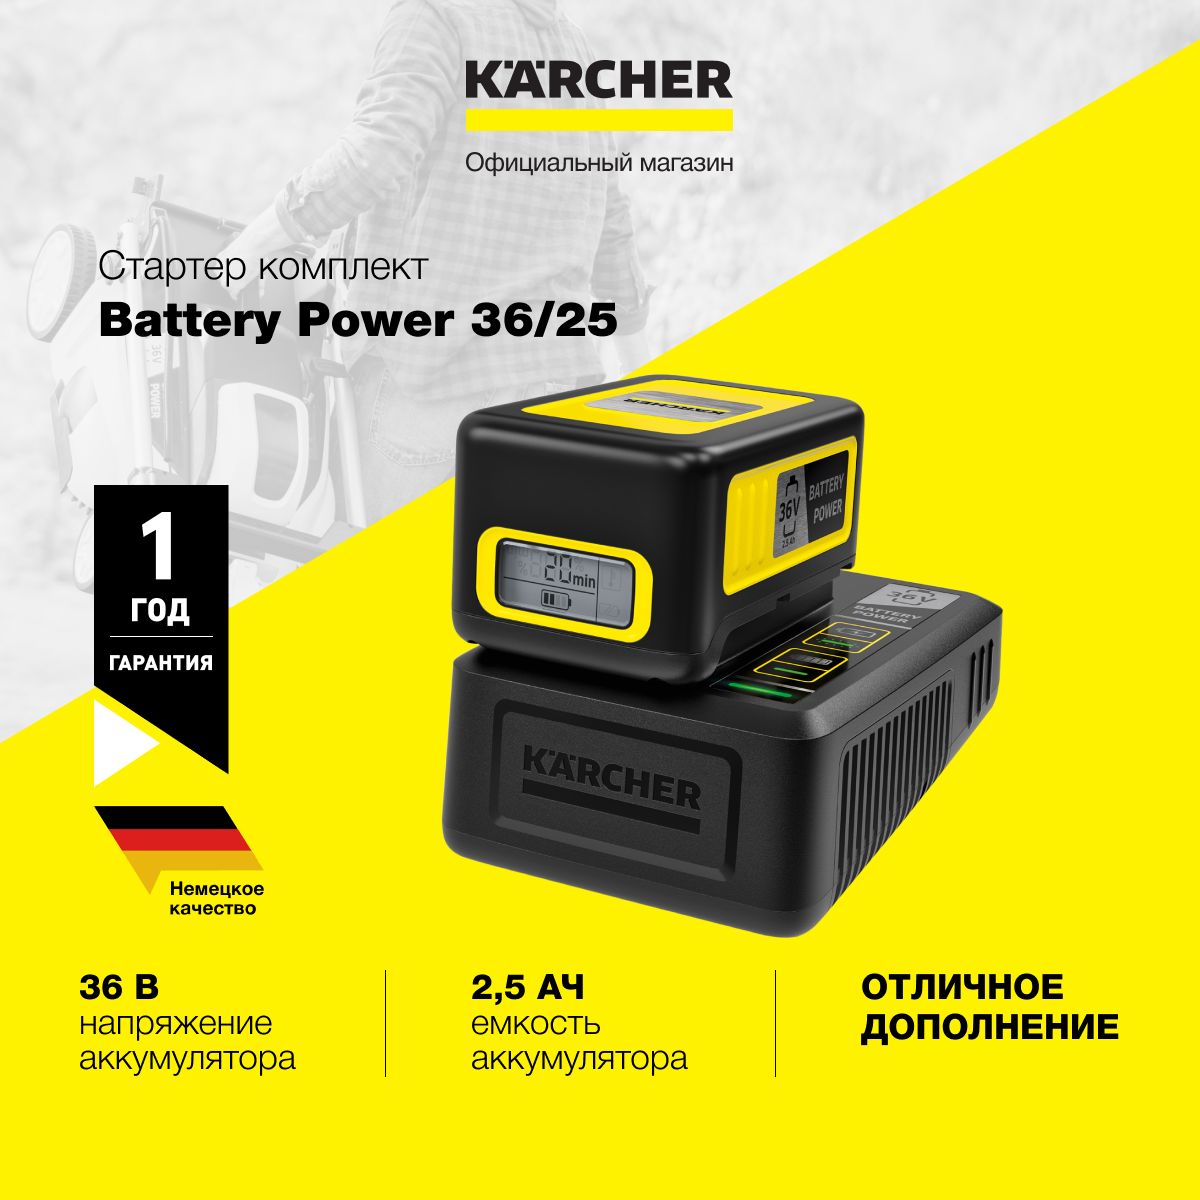 Karcher battery power. Karcher Battery Battery Power 36/50 аккумулятор. Kärcher Battery Battery Power 36/25 аккумулятор. Kärcher Battery Battery Power 18/25 аккумулятор. Kärcher Battery Battery Power 18/50 аккумулятор.